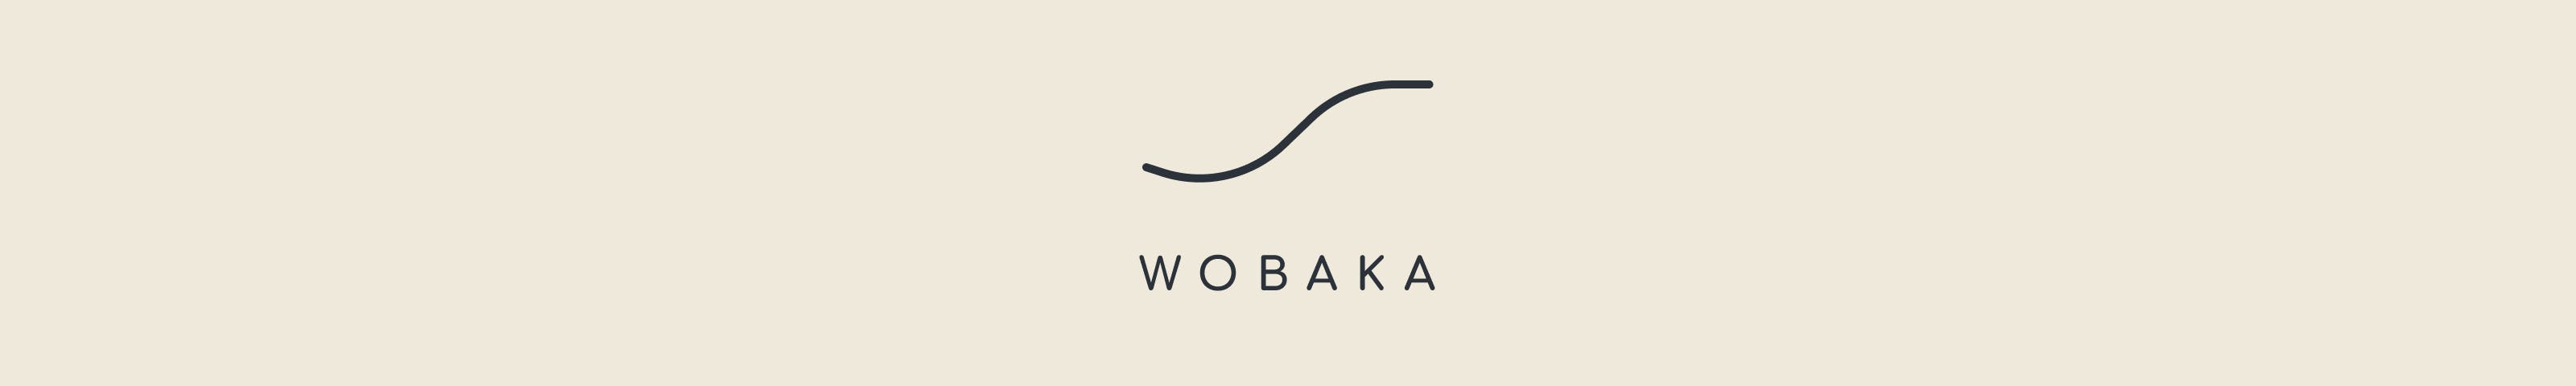 Wobaka logo